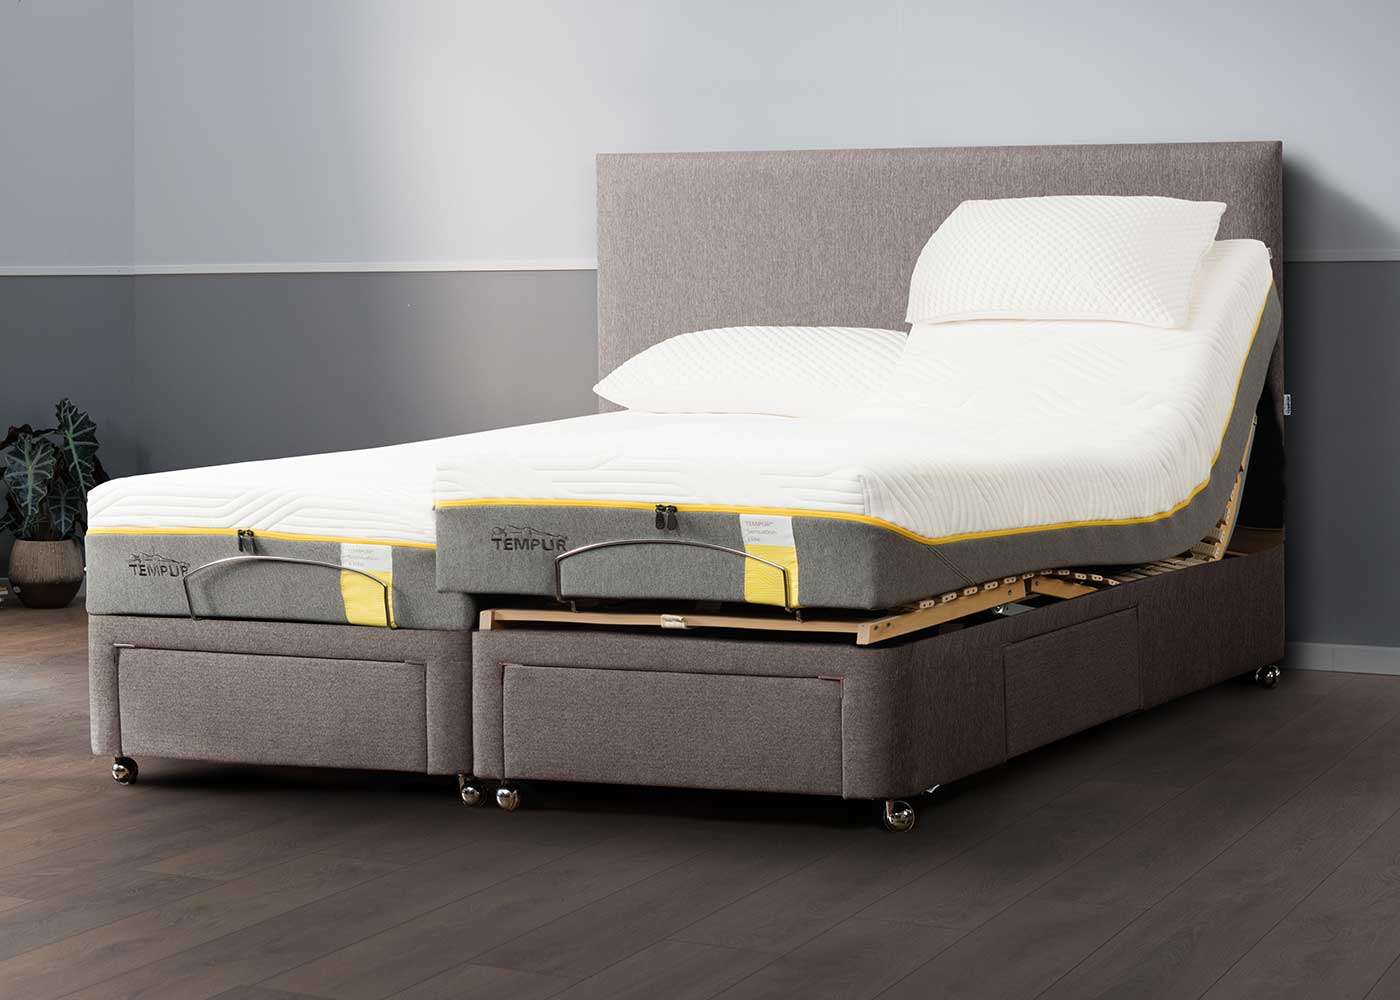 Tempur King Size Adjustable Bed 